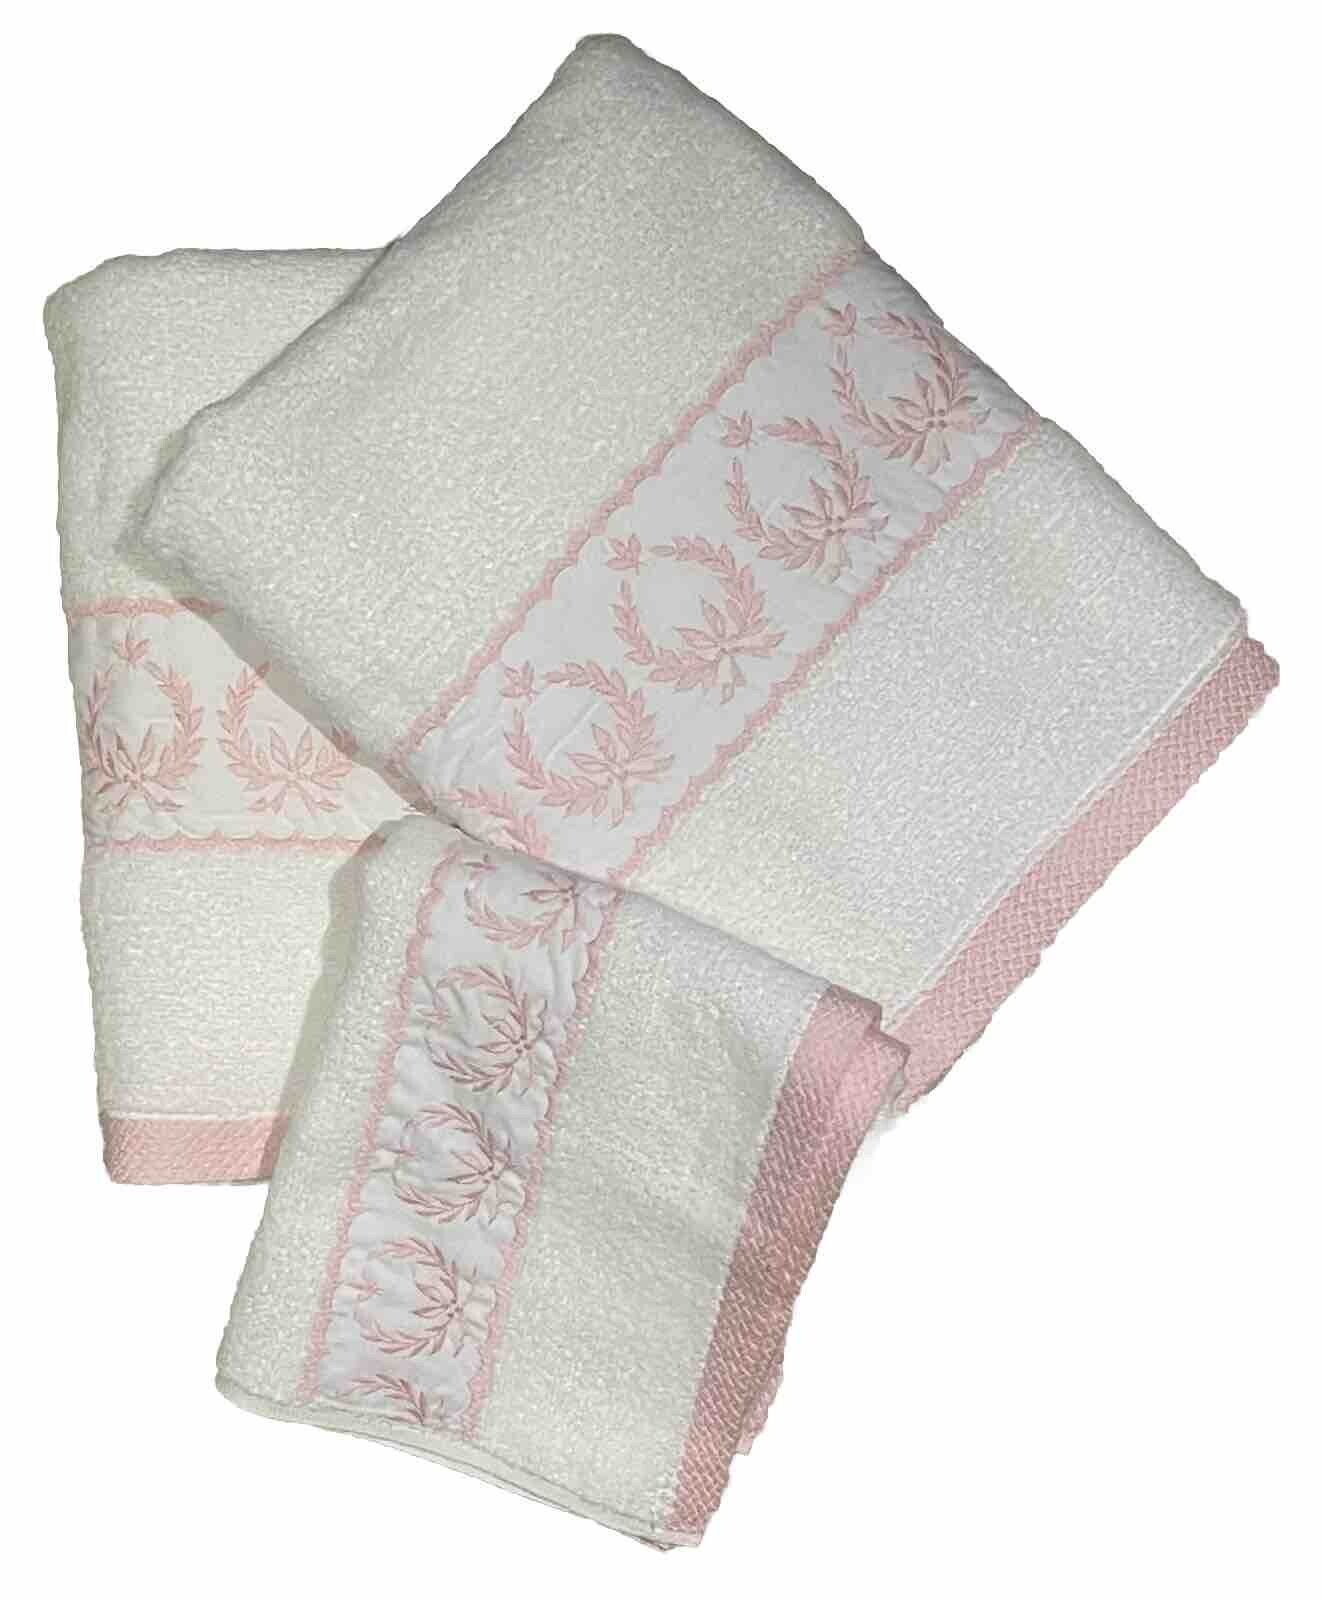 Vintage 1960s Wamsutta Heritage 100% Cotton Formal Embroidered Towel Set NWT